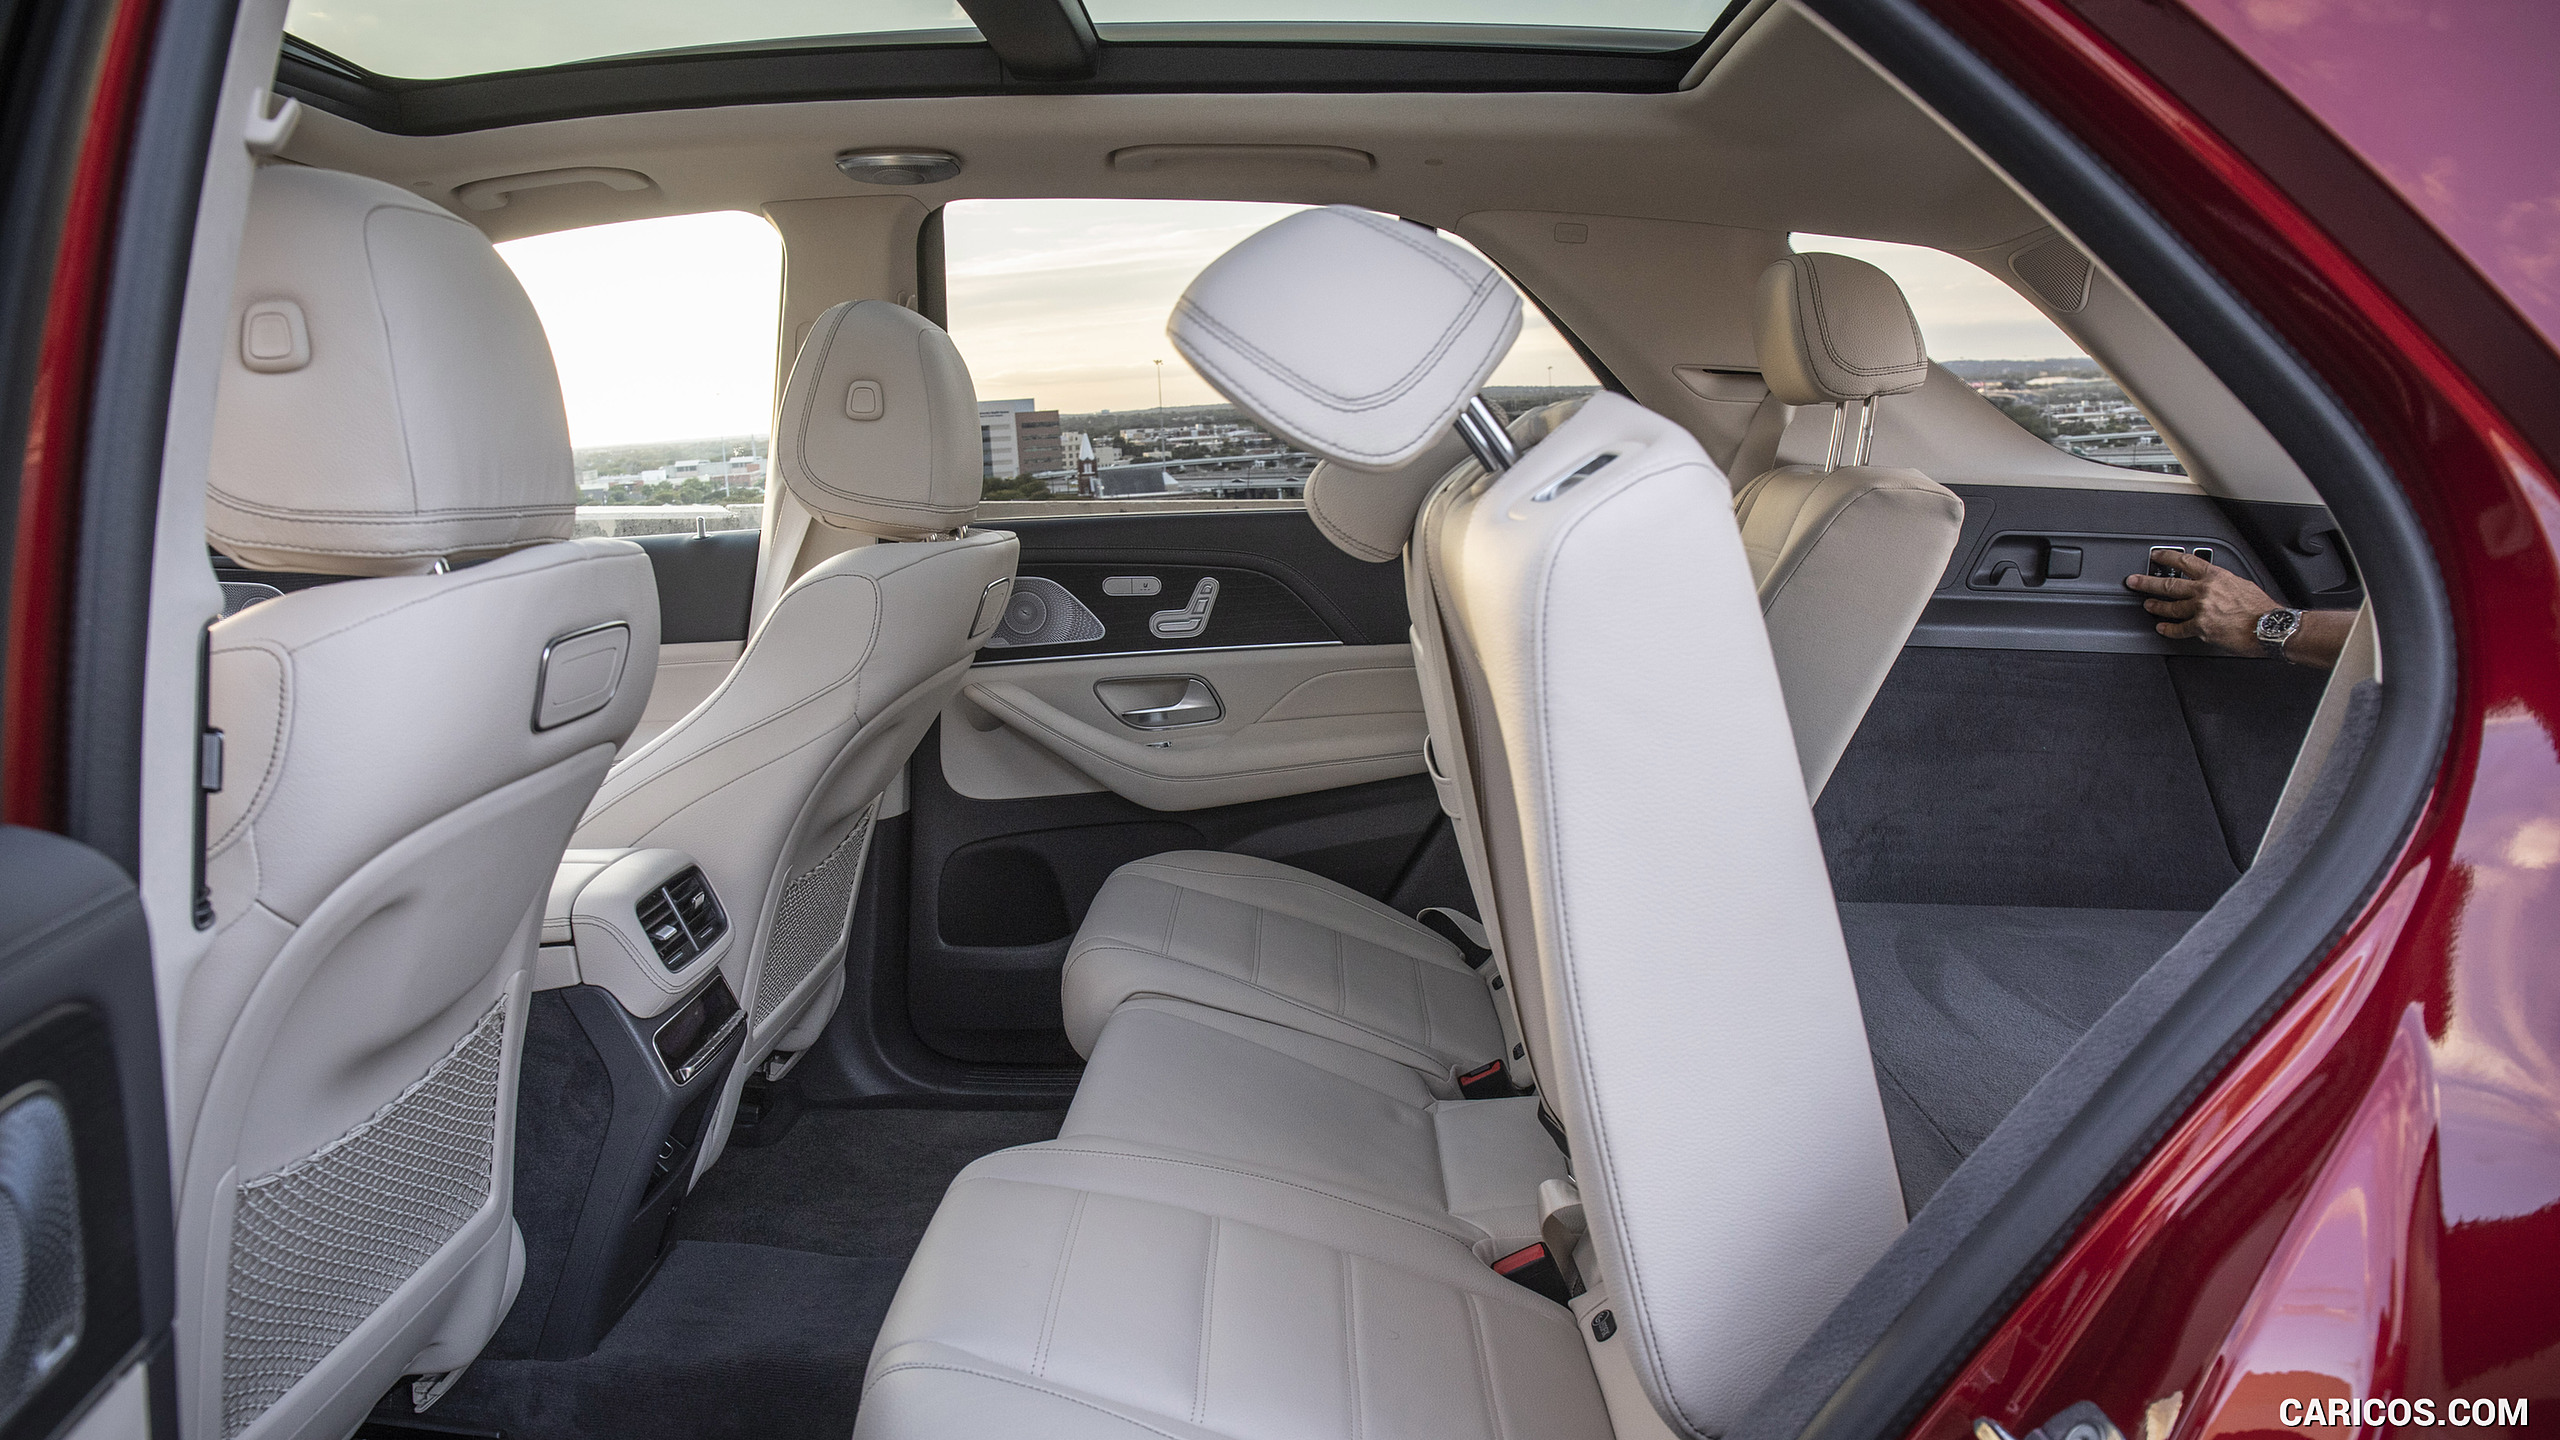 2020 Mercedes-Benz GLE 450 4MATIC (Color: Designo Hyazinth Red Metallic; US-Spec) - Interior, Rear Seats, #341 of 358